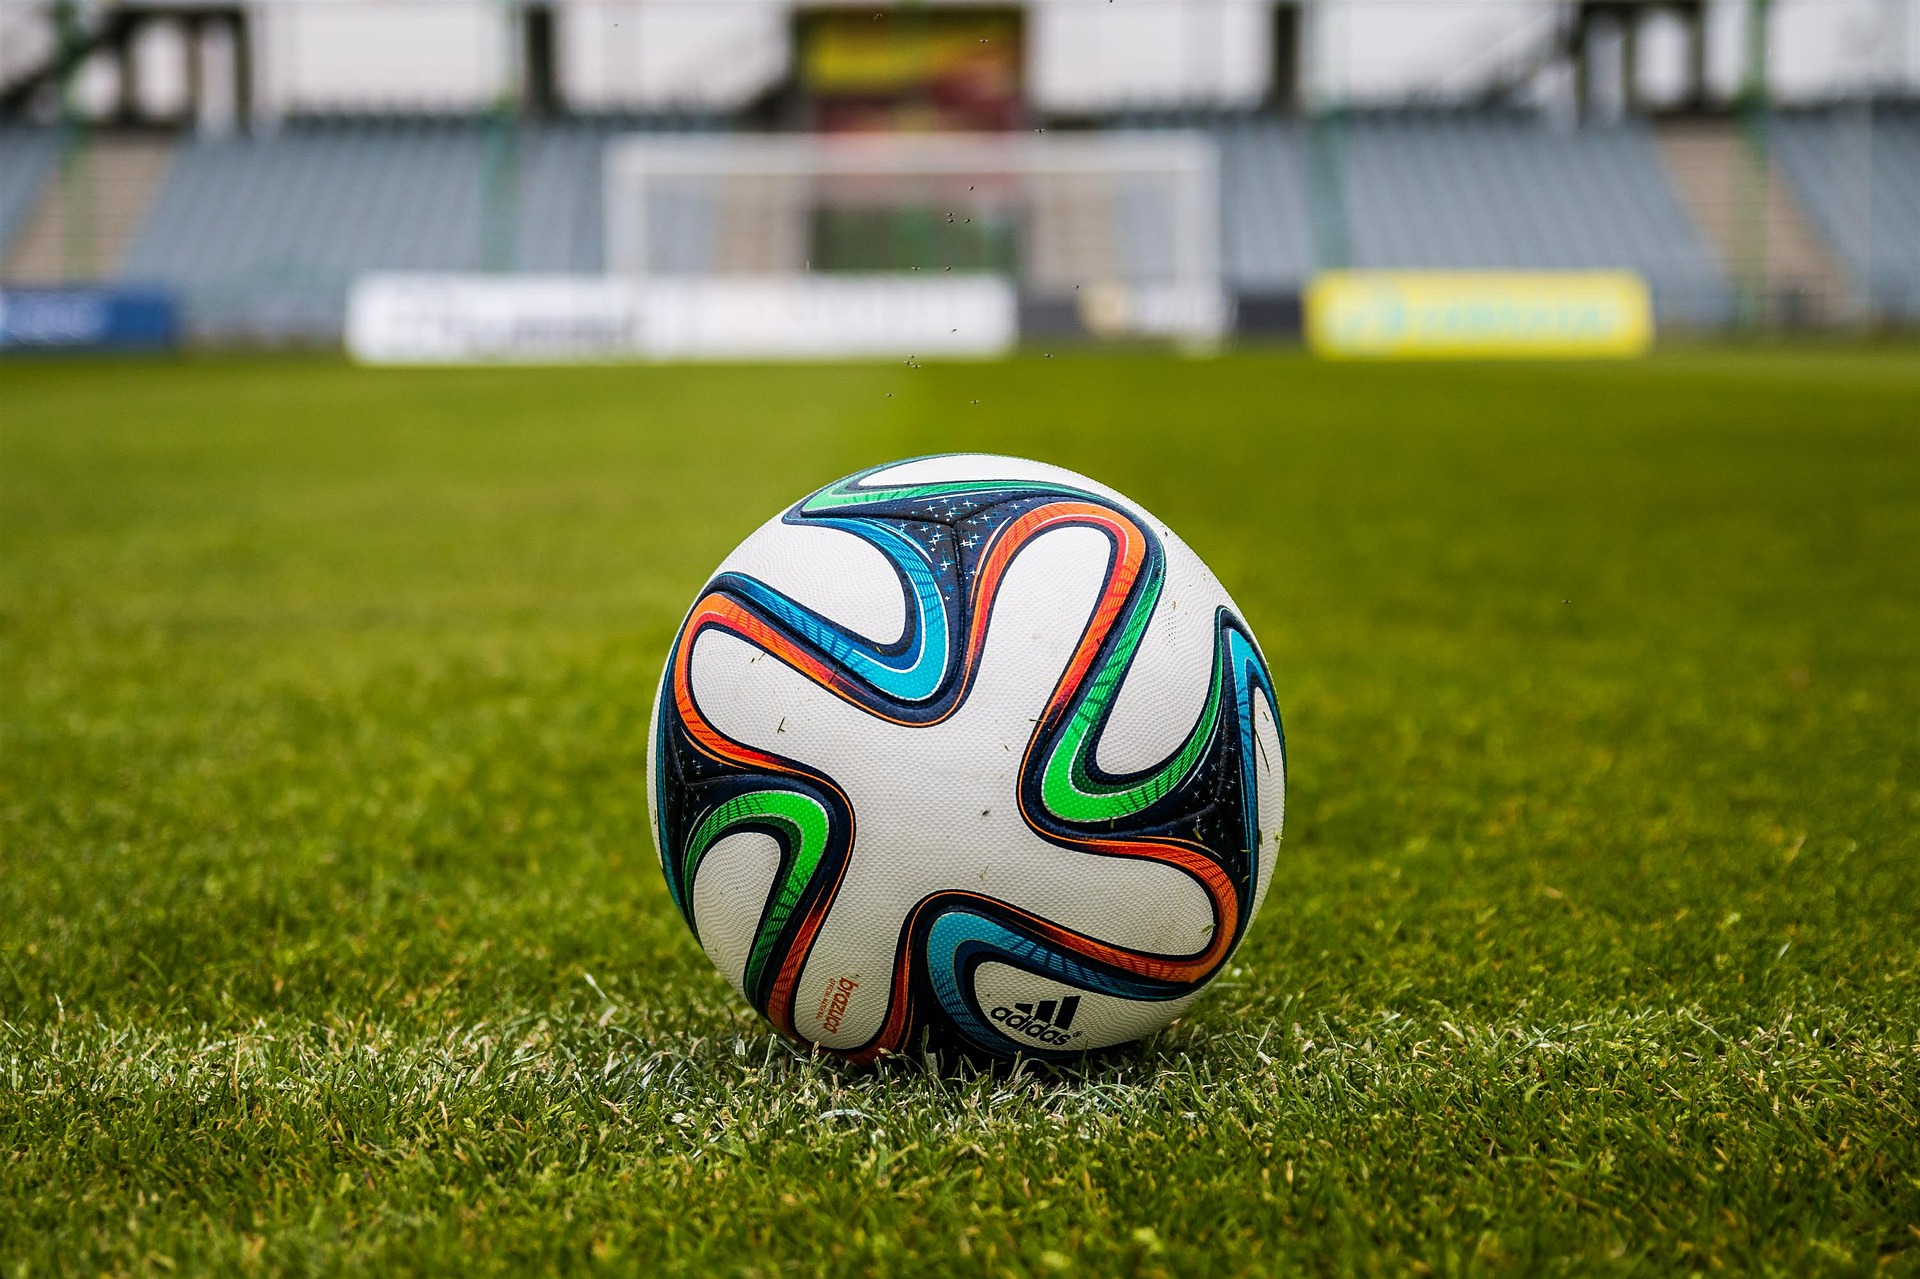 FIFA-Gianni Infantino :  « Le football passe au second plan »